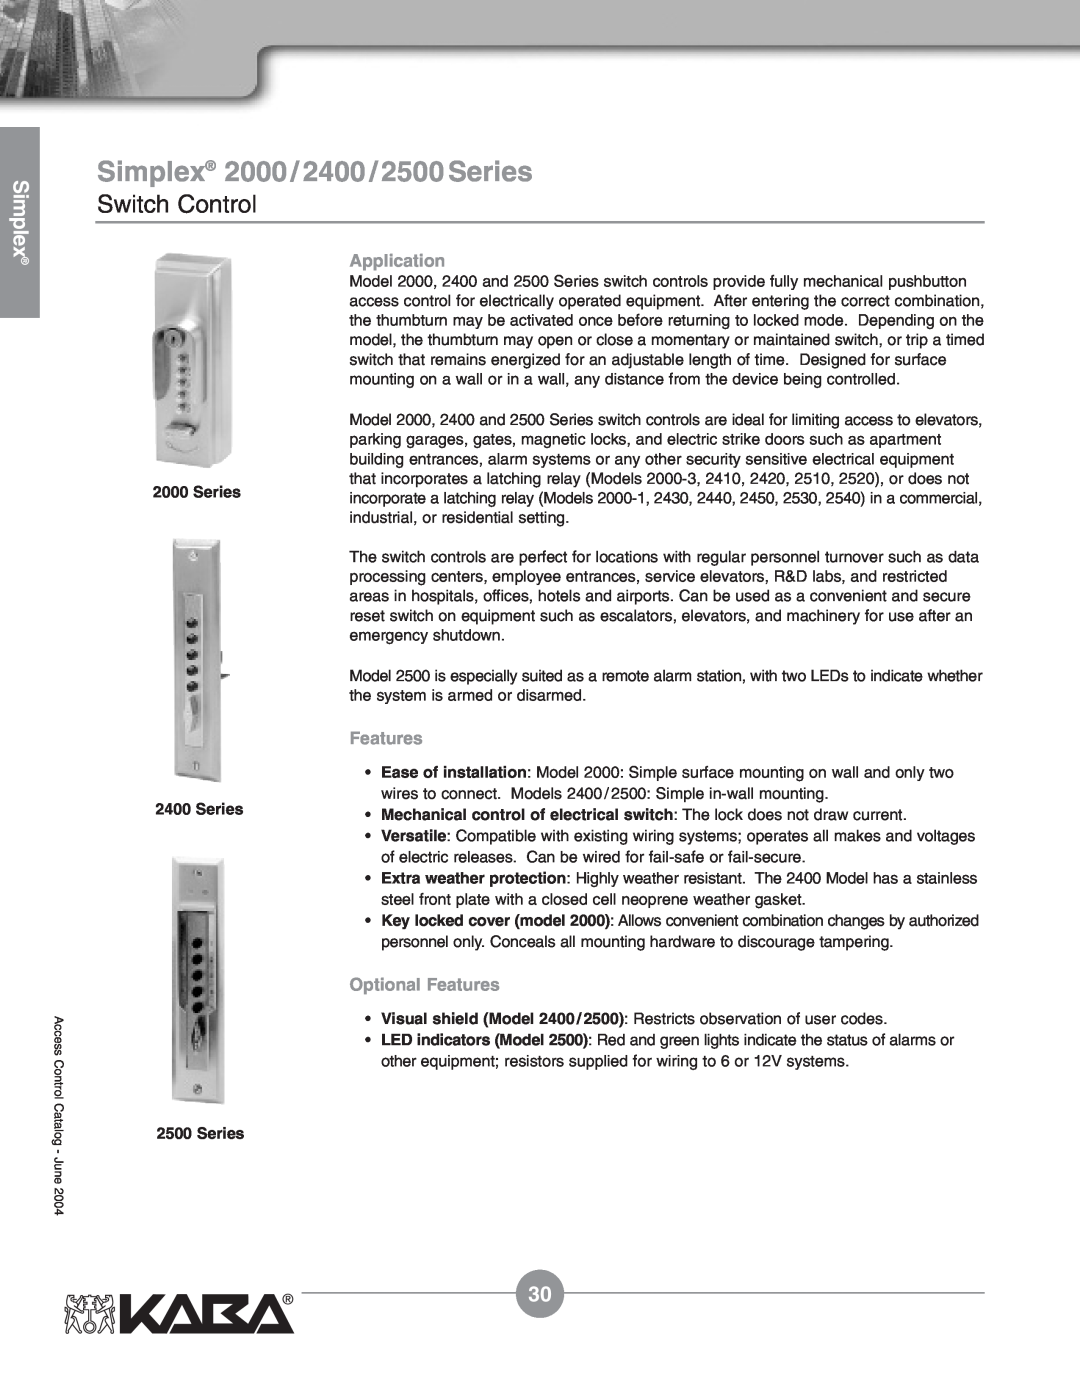 Assa Mechanical Pushbutton Locks manual Simplex 2000 / 2400 / 2500 Series, Switch Control, Application, Features 